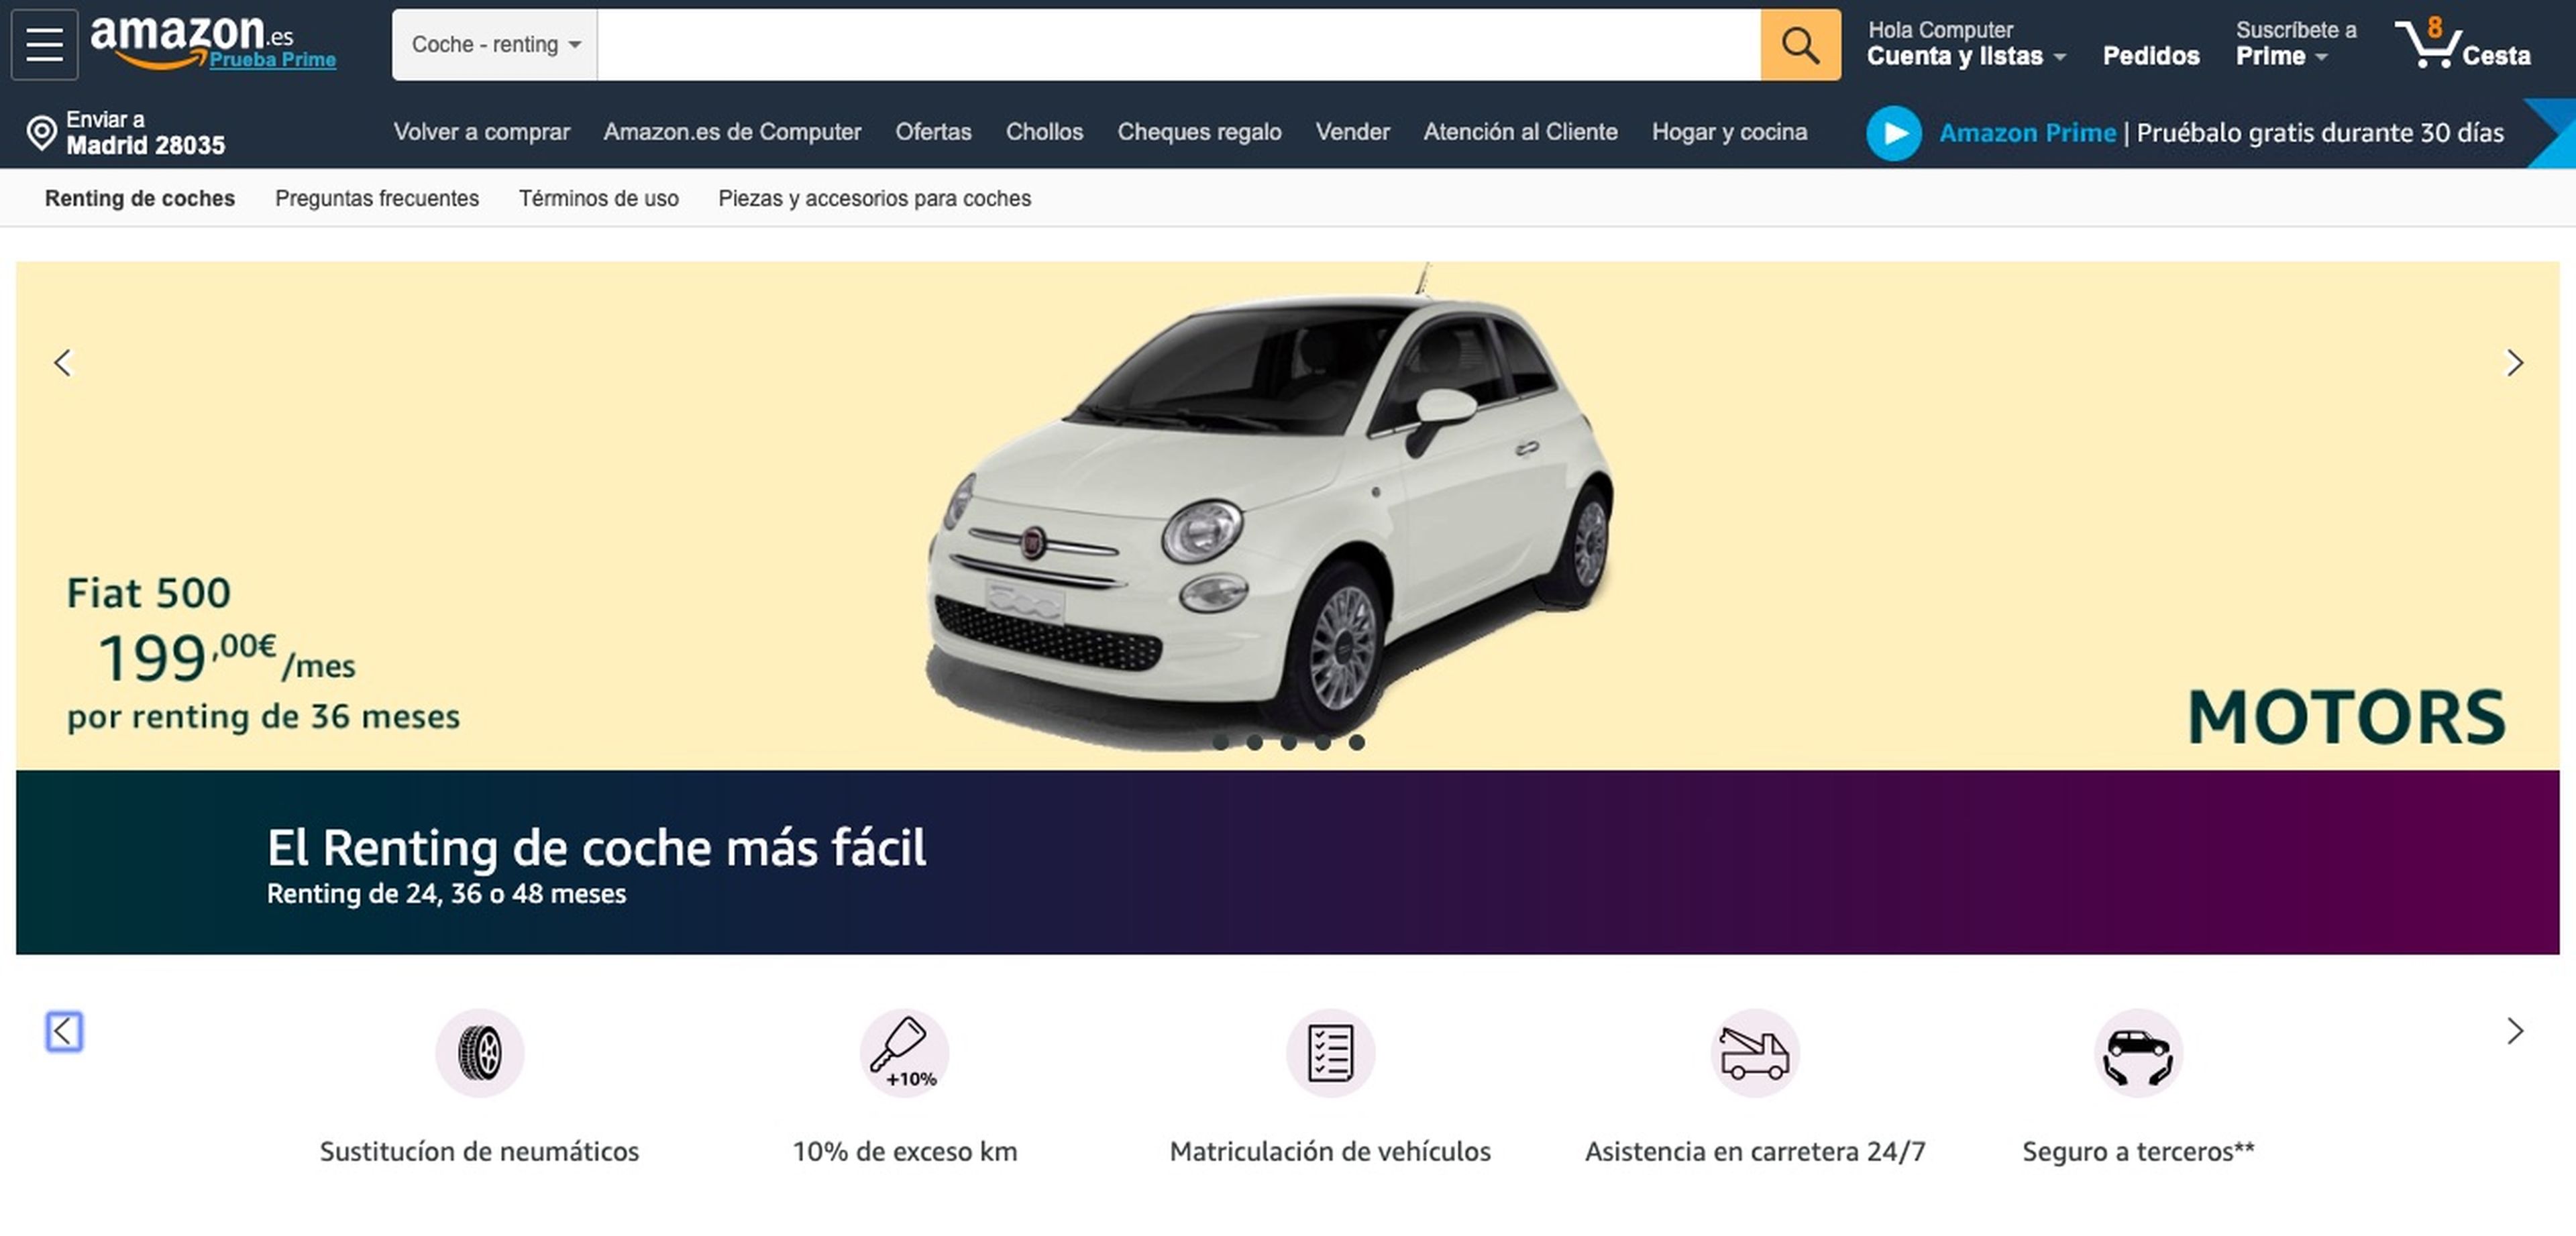 Renting de coches de Amazon